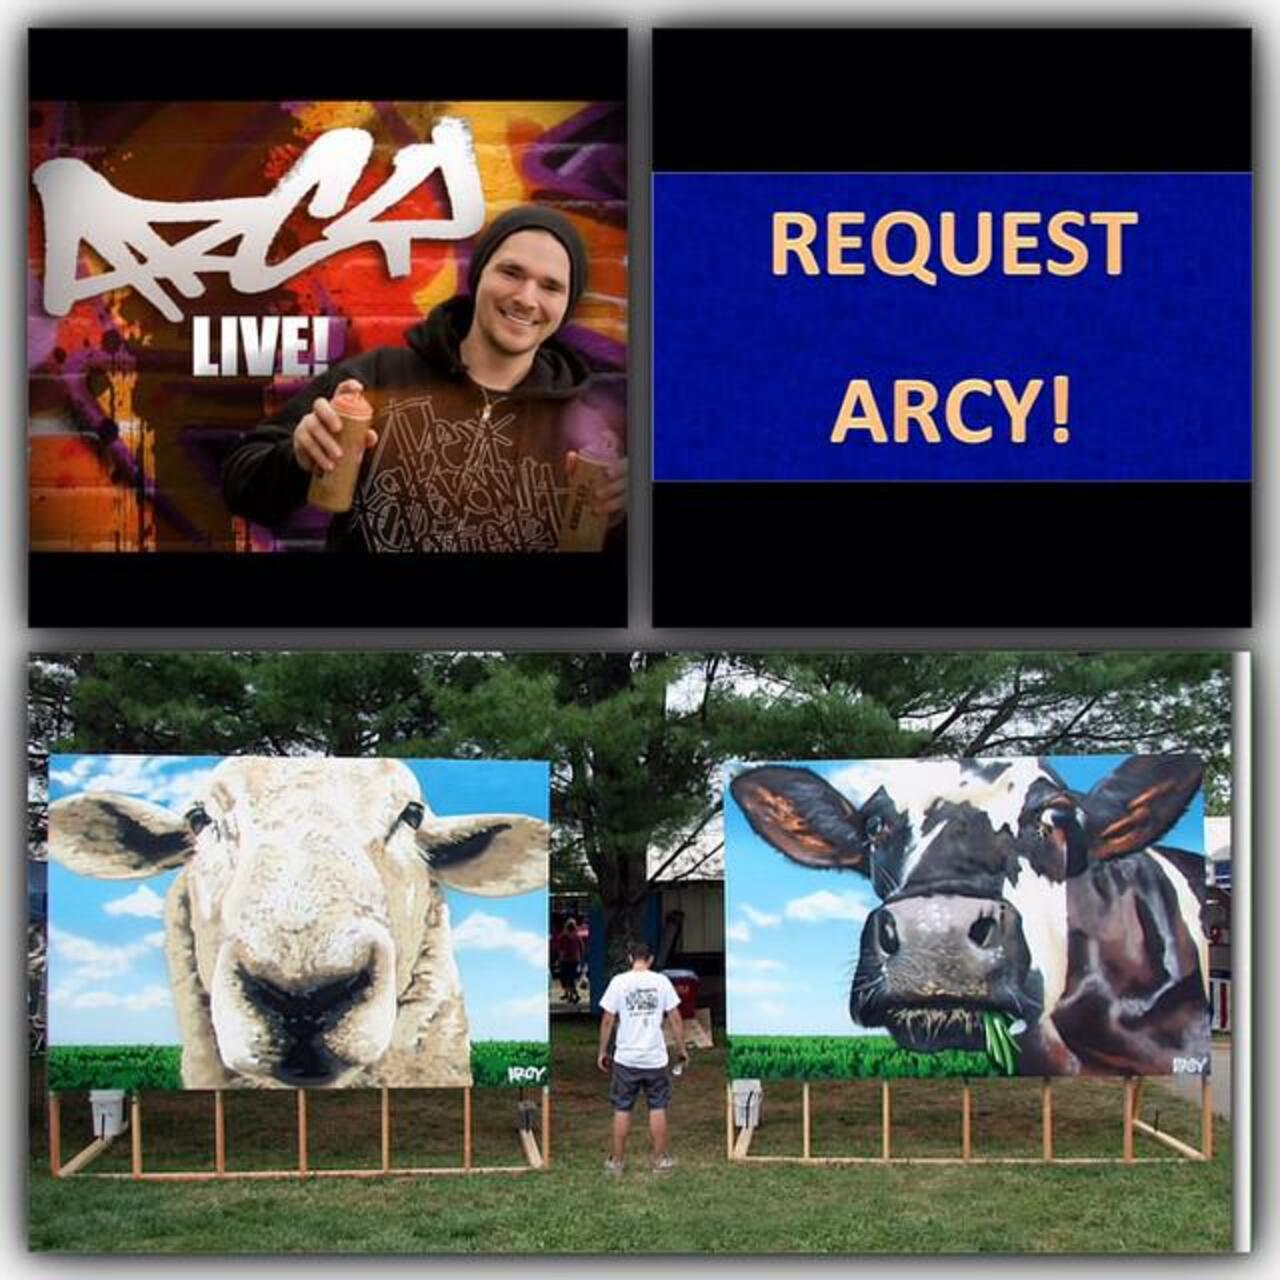 CONTACT YOUR LOCAL FAIR REP!  Request #ARCY of #RCMurals.  #graffiti #fairseason #fairs #festivals #spraypaint #mural http://t.co/EBcvPZ6Fk2